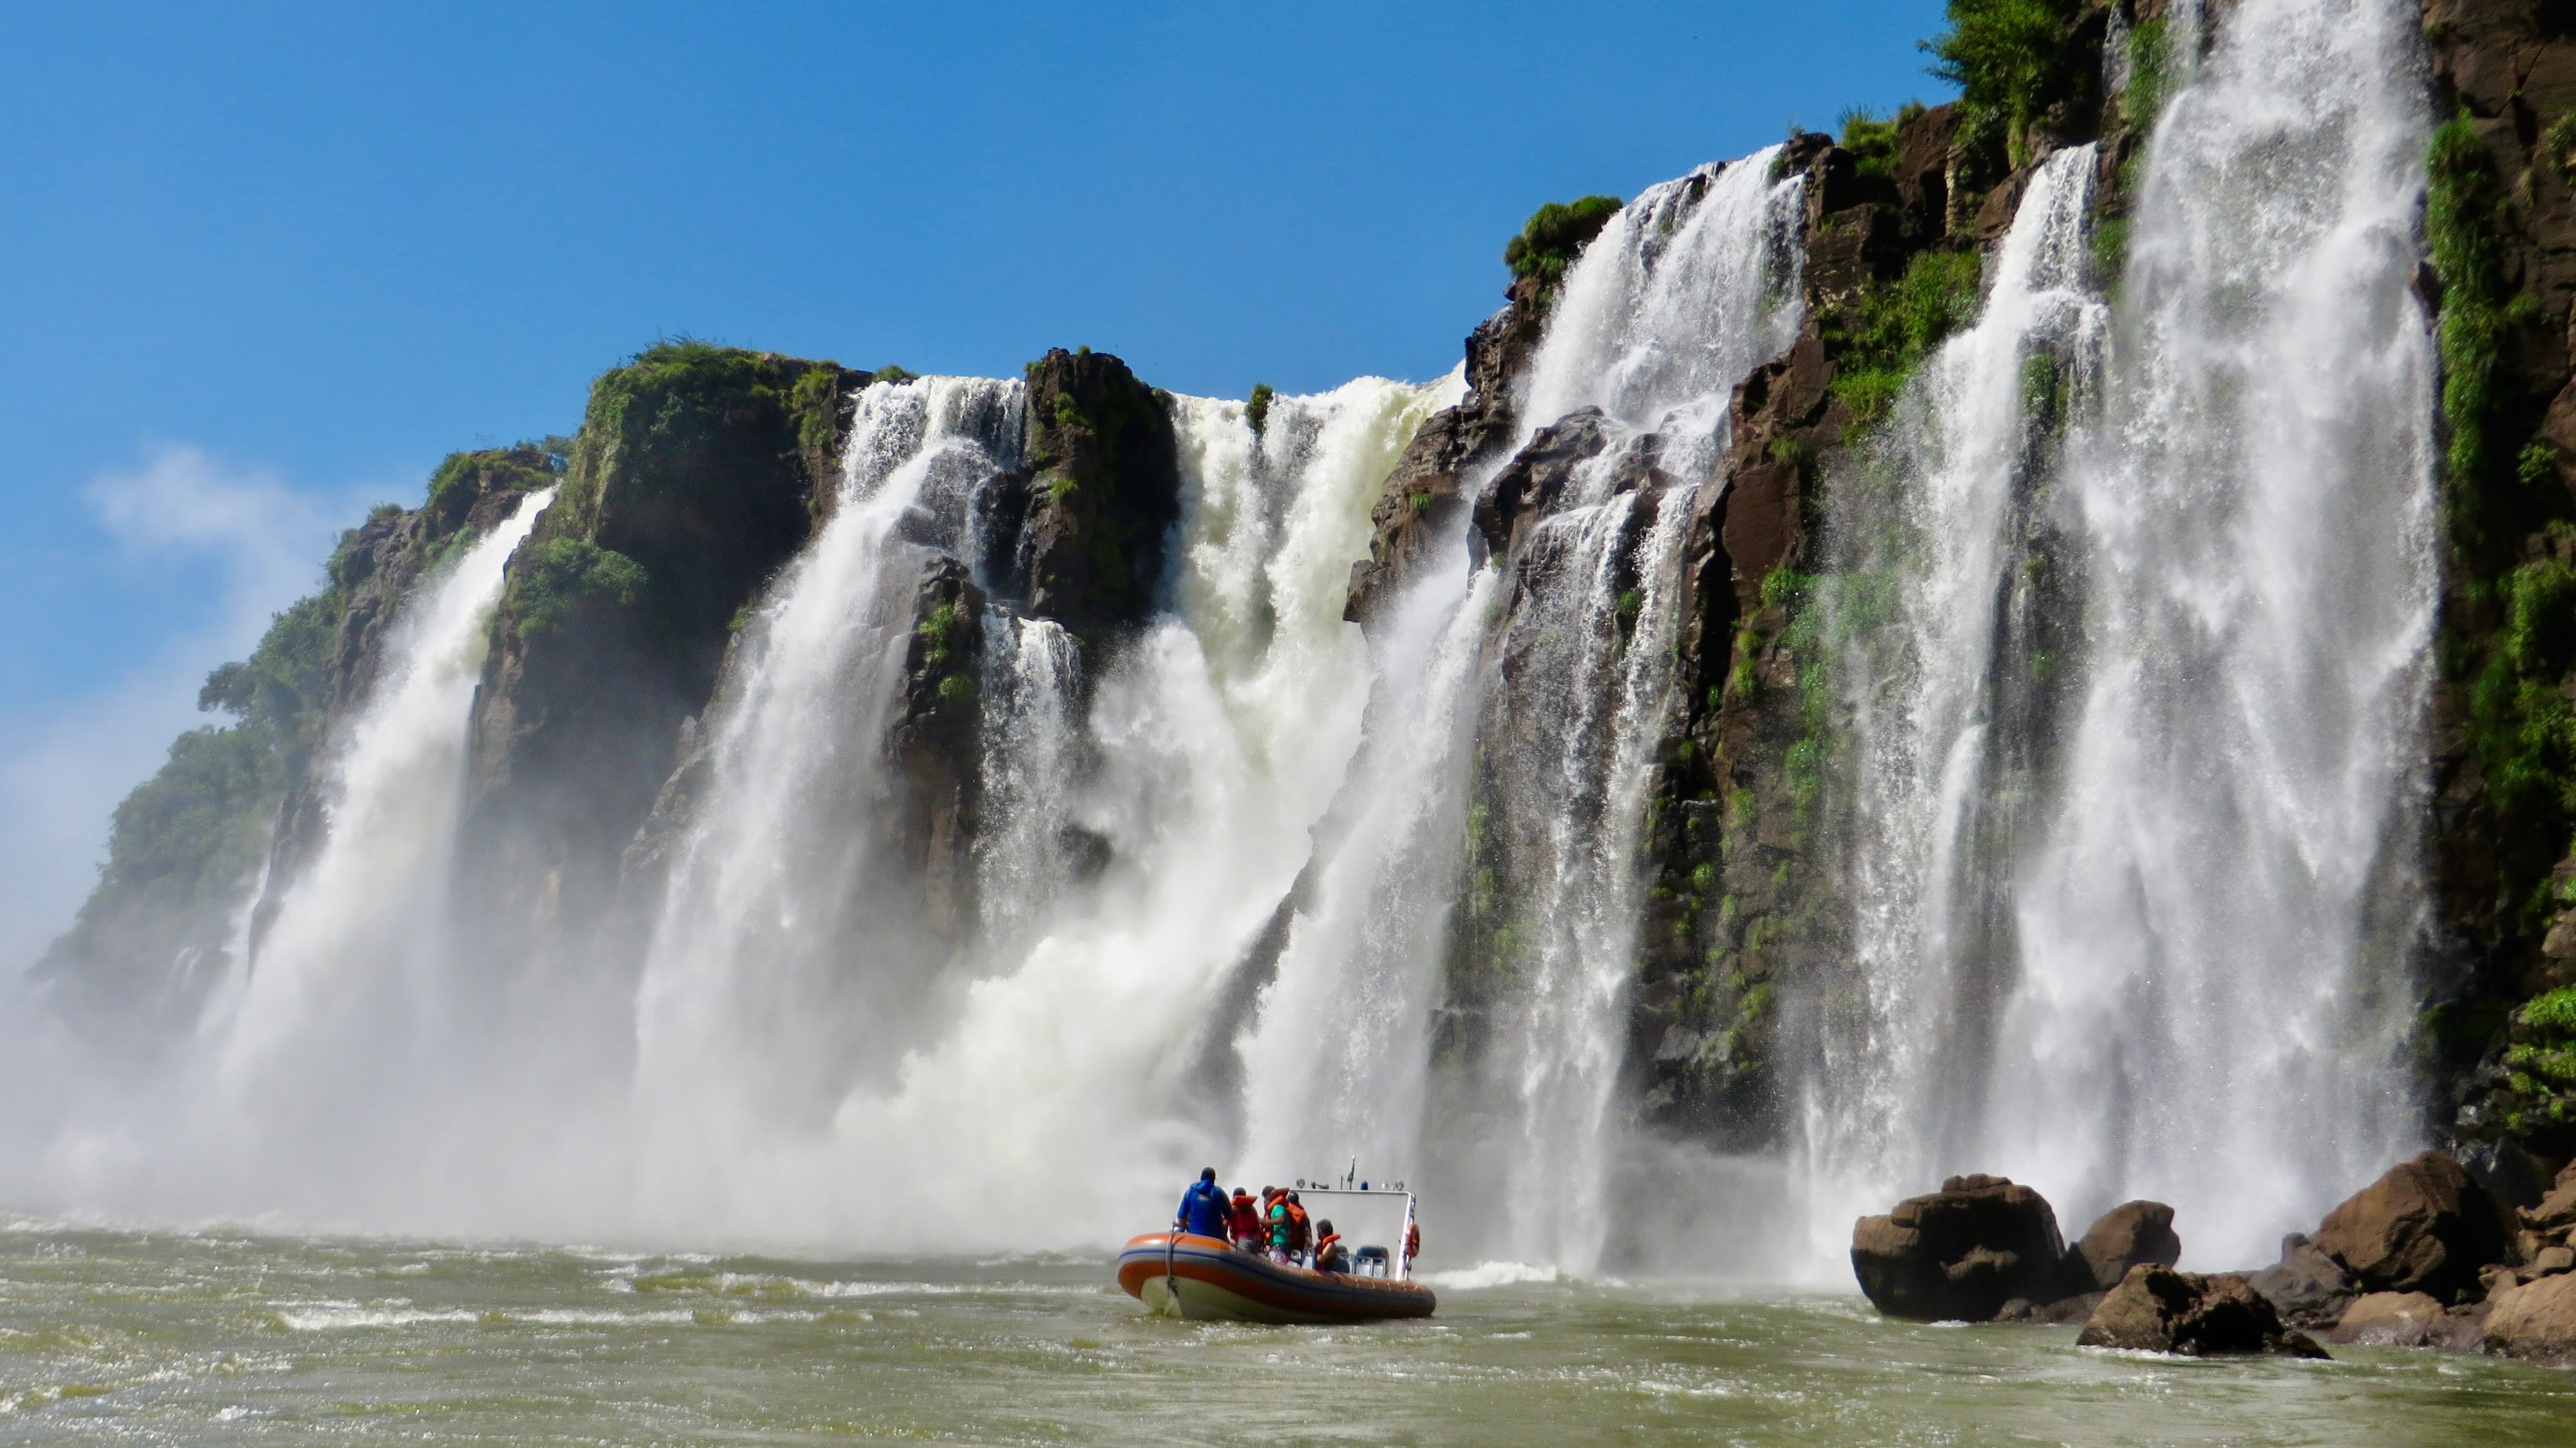 Iguazú Falls Argentina Visit, River Cruise about to get wet